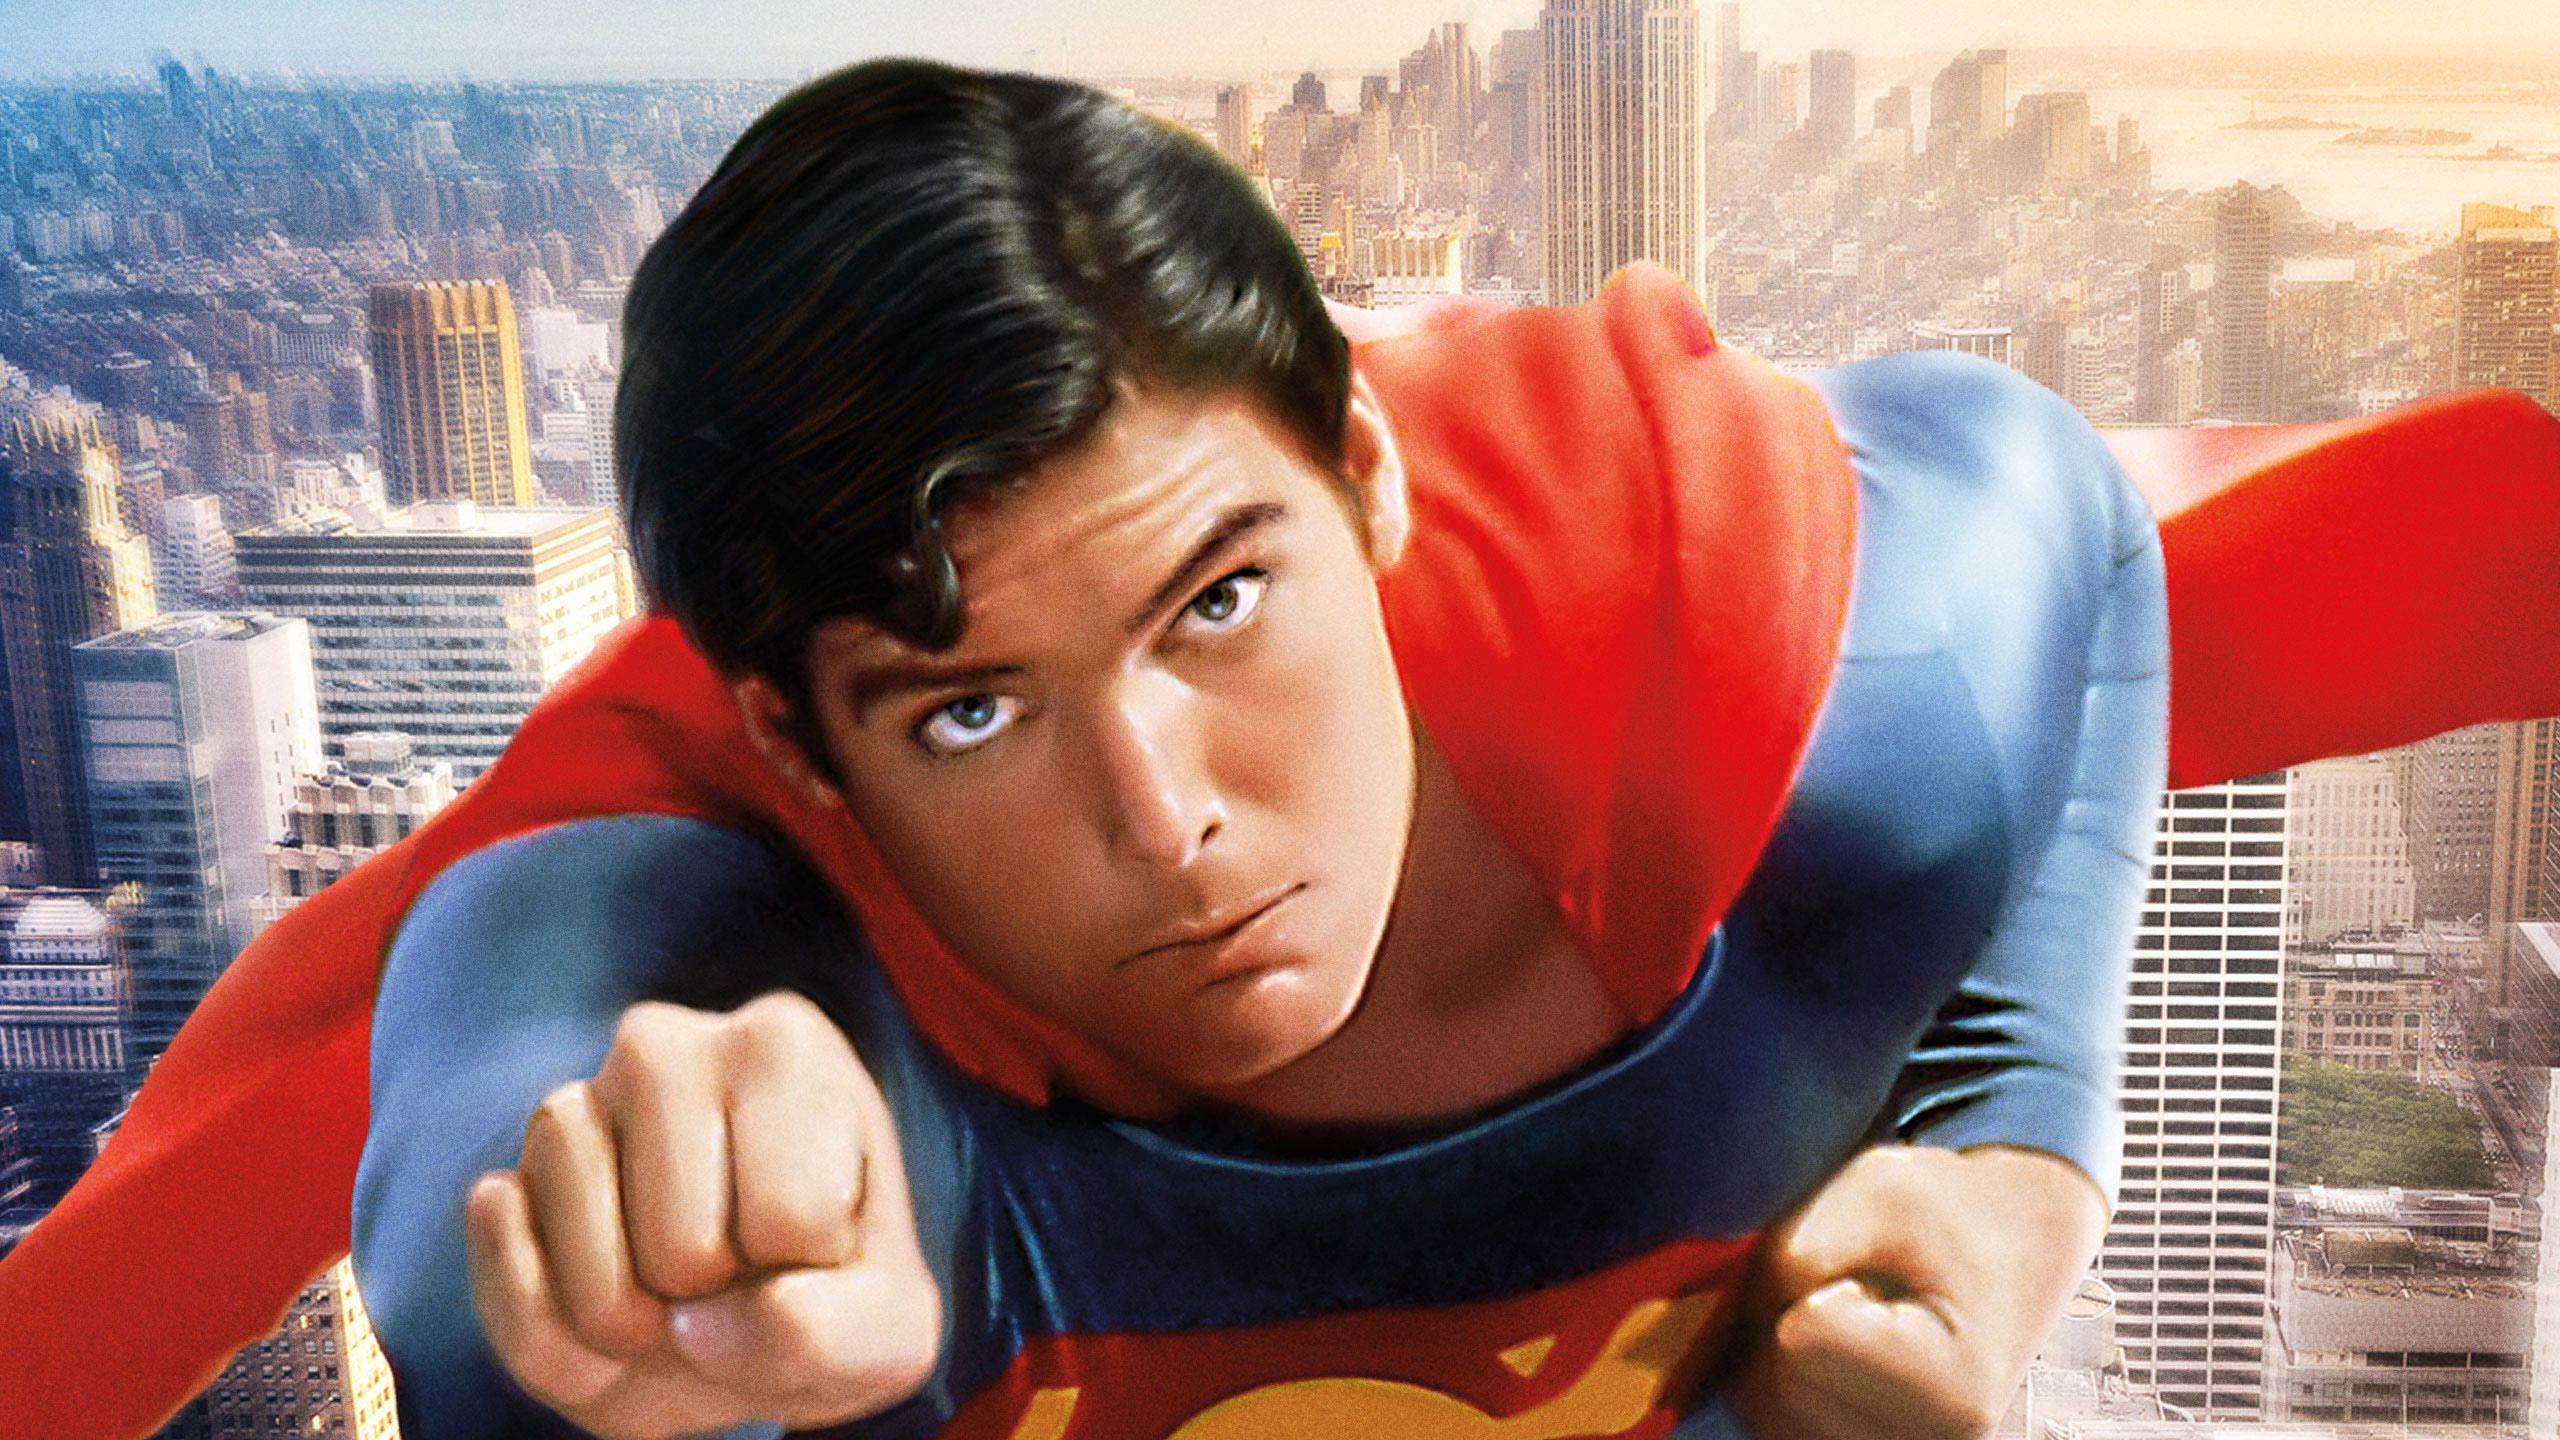 Superman: The Movie | Movies Anywhere